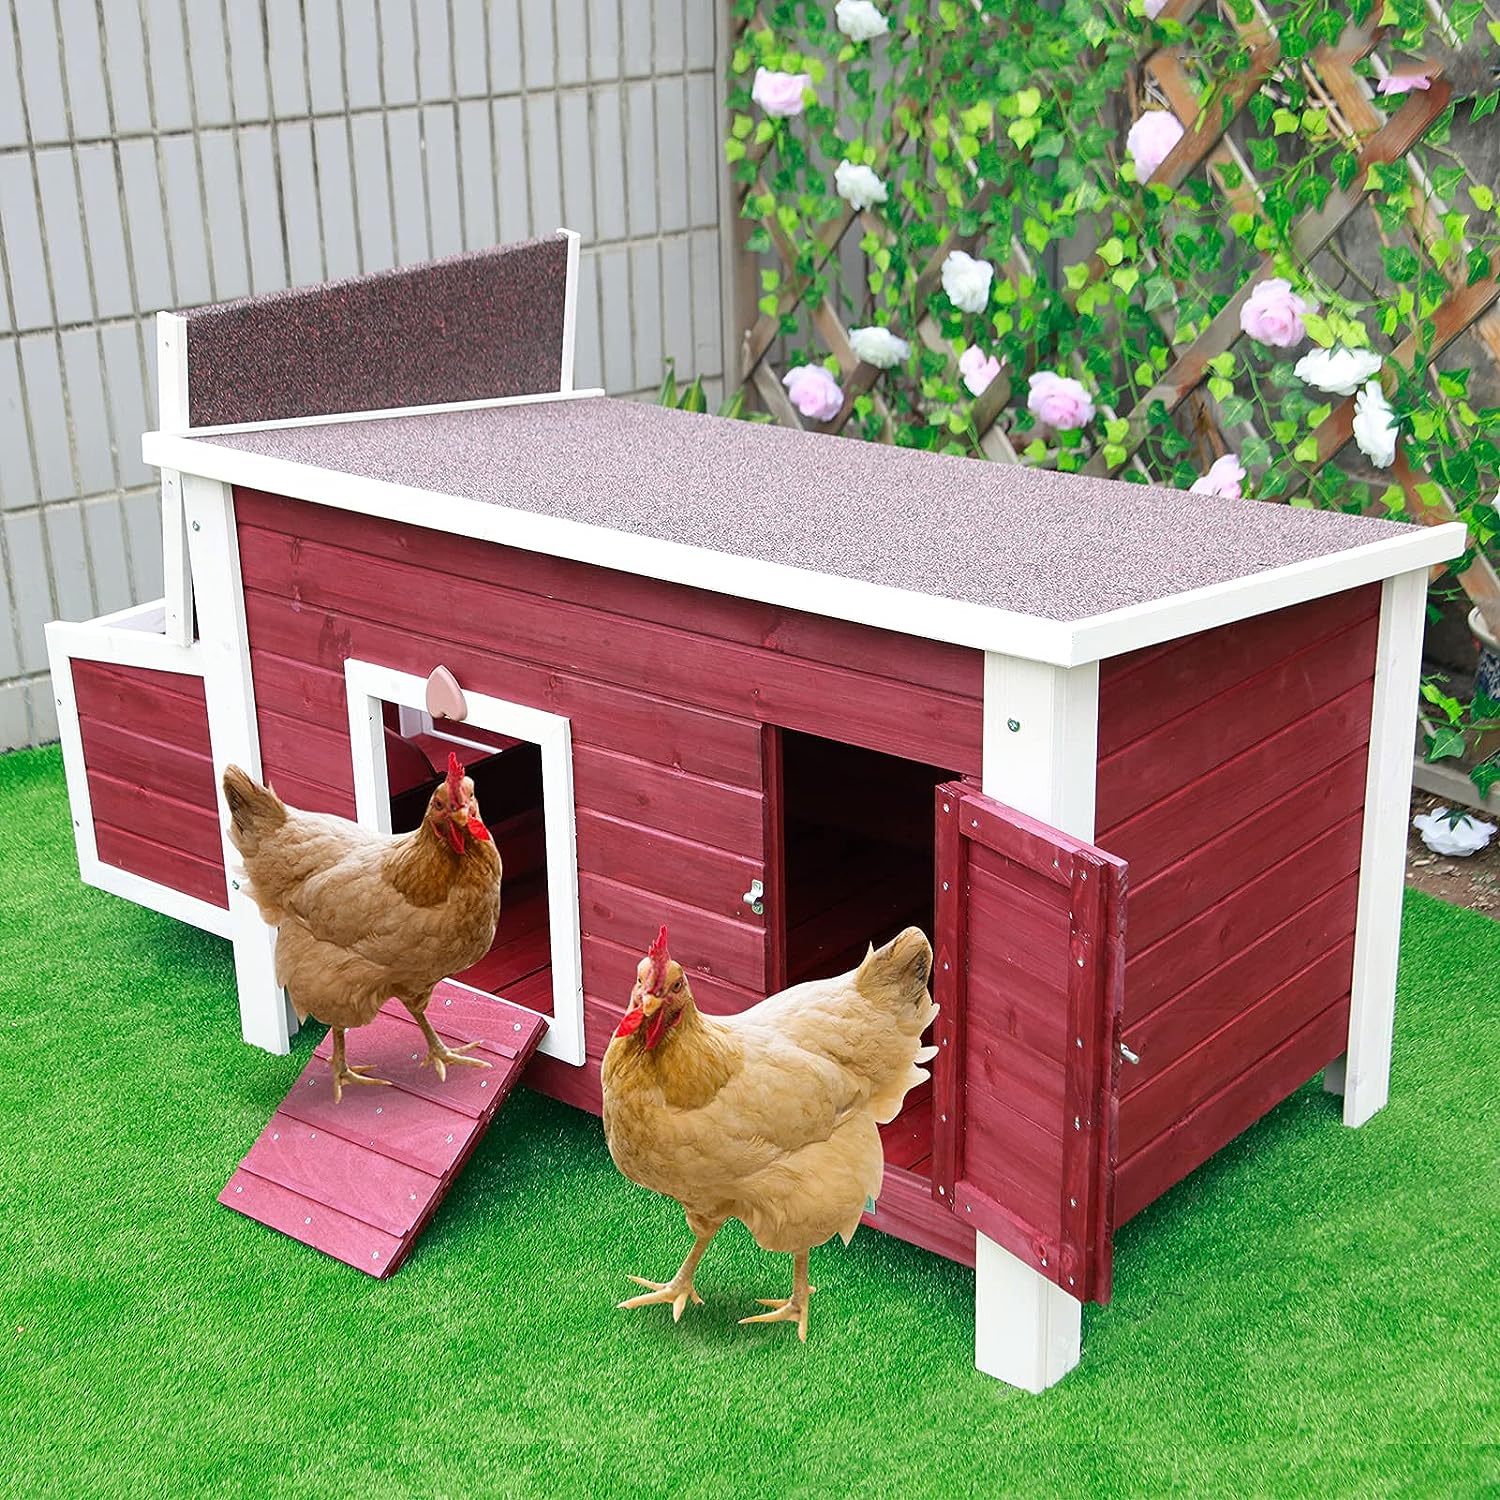 Petsfit Chicken Coop Review